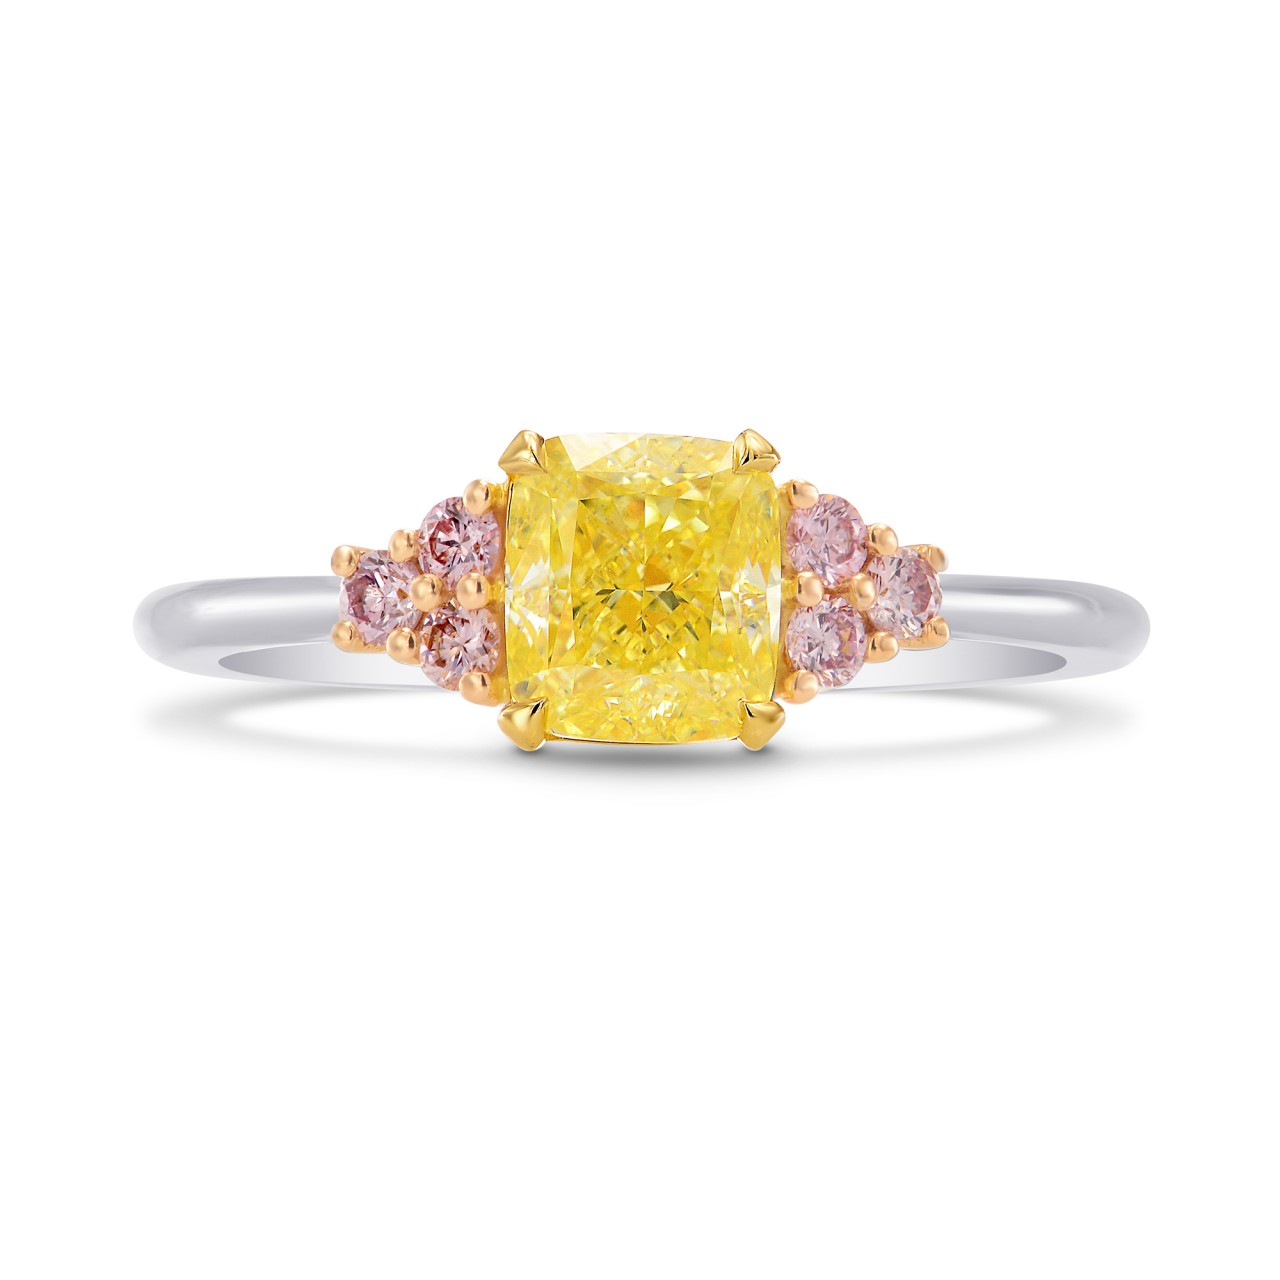 Fancy Yellow Cushion & Pink Diamond Engagement Ring, SKU 251410 (1.17Ct TW)